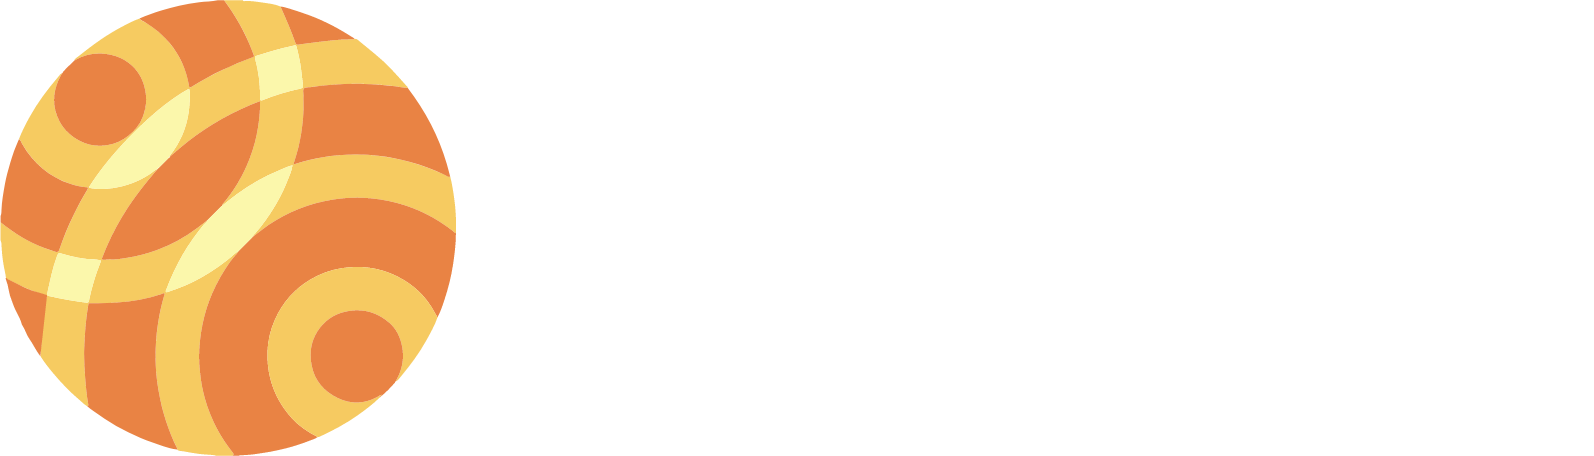 Bank of Ningbo
 Logo groß für dunkle Hintergründe (transparentes PNG)